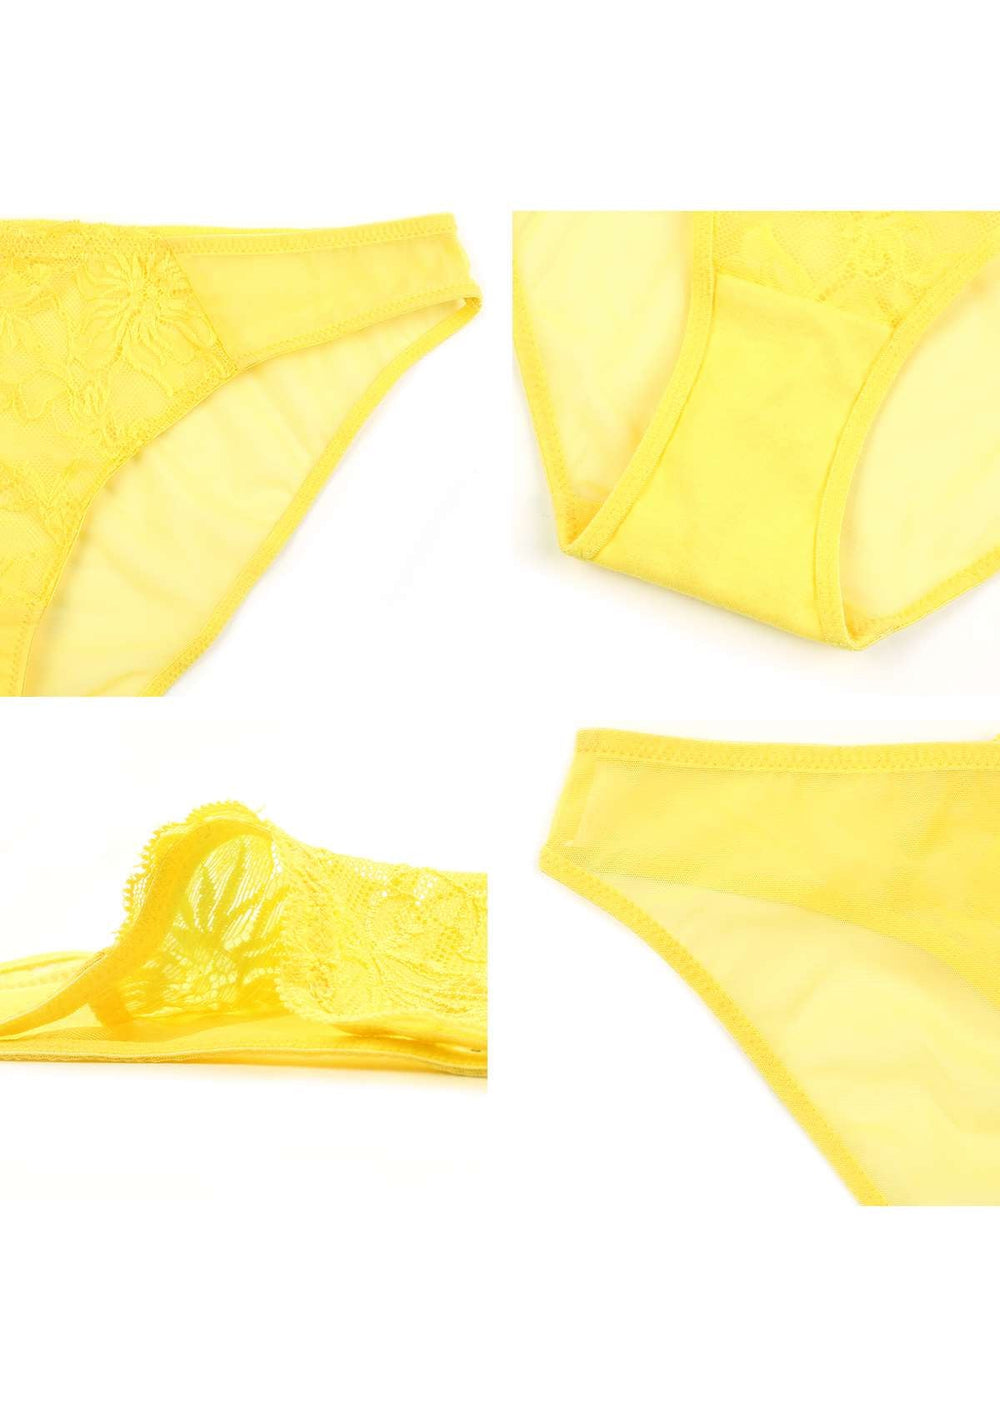 Premium Photo  White lace women's panties on a bright yellow